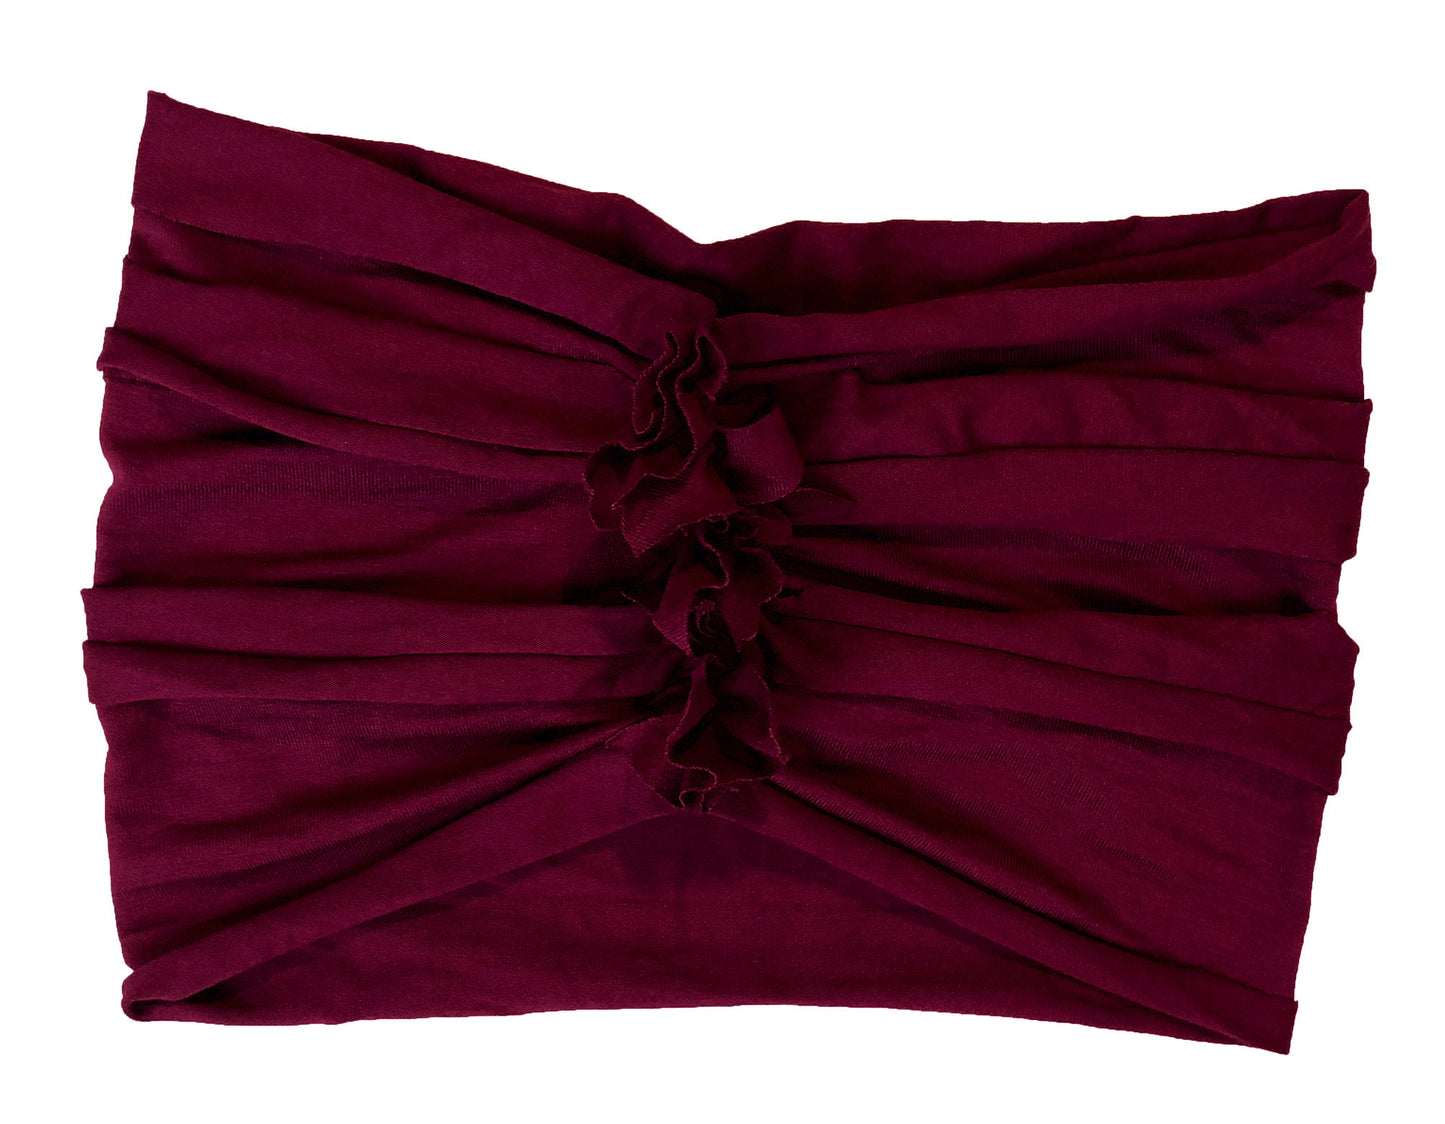 Burgundy red soft cotton turban headband